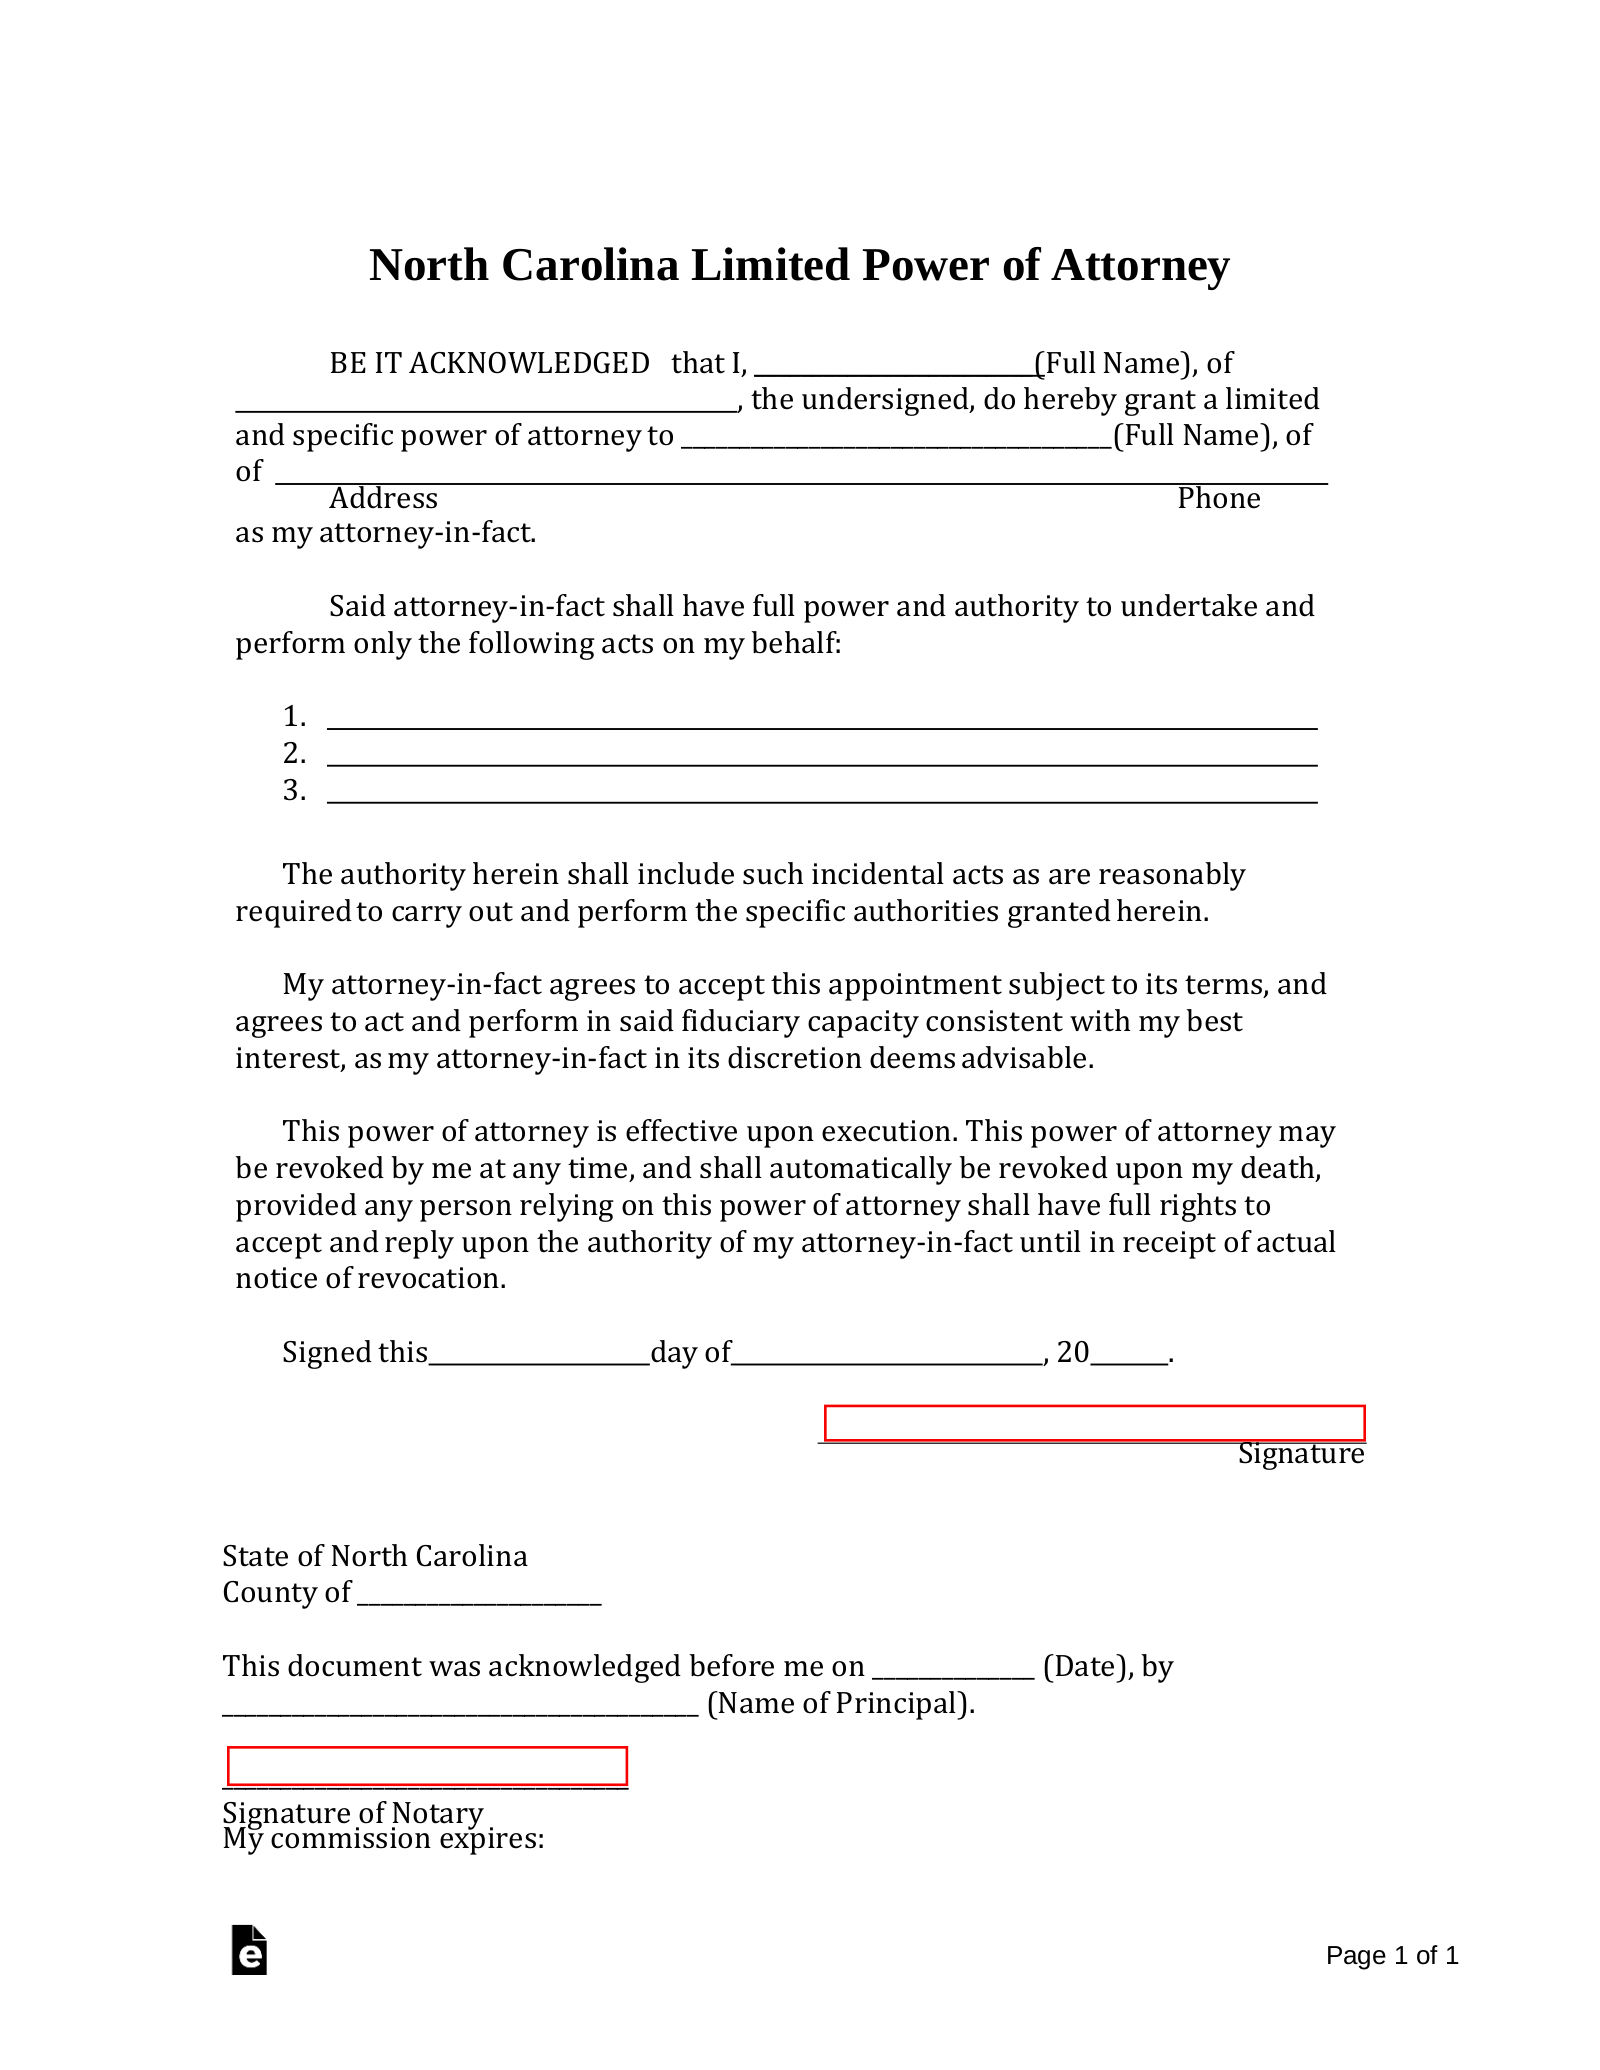 North Carolina Limited Power of Attorney Form